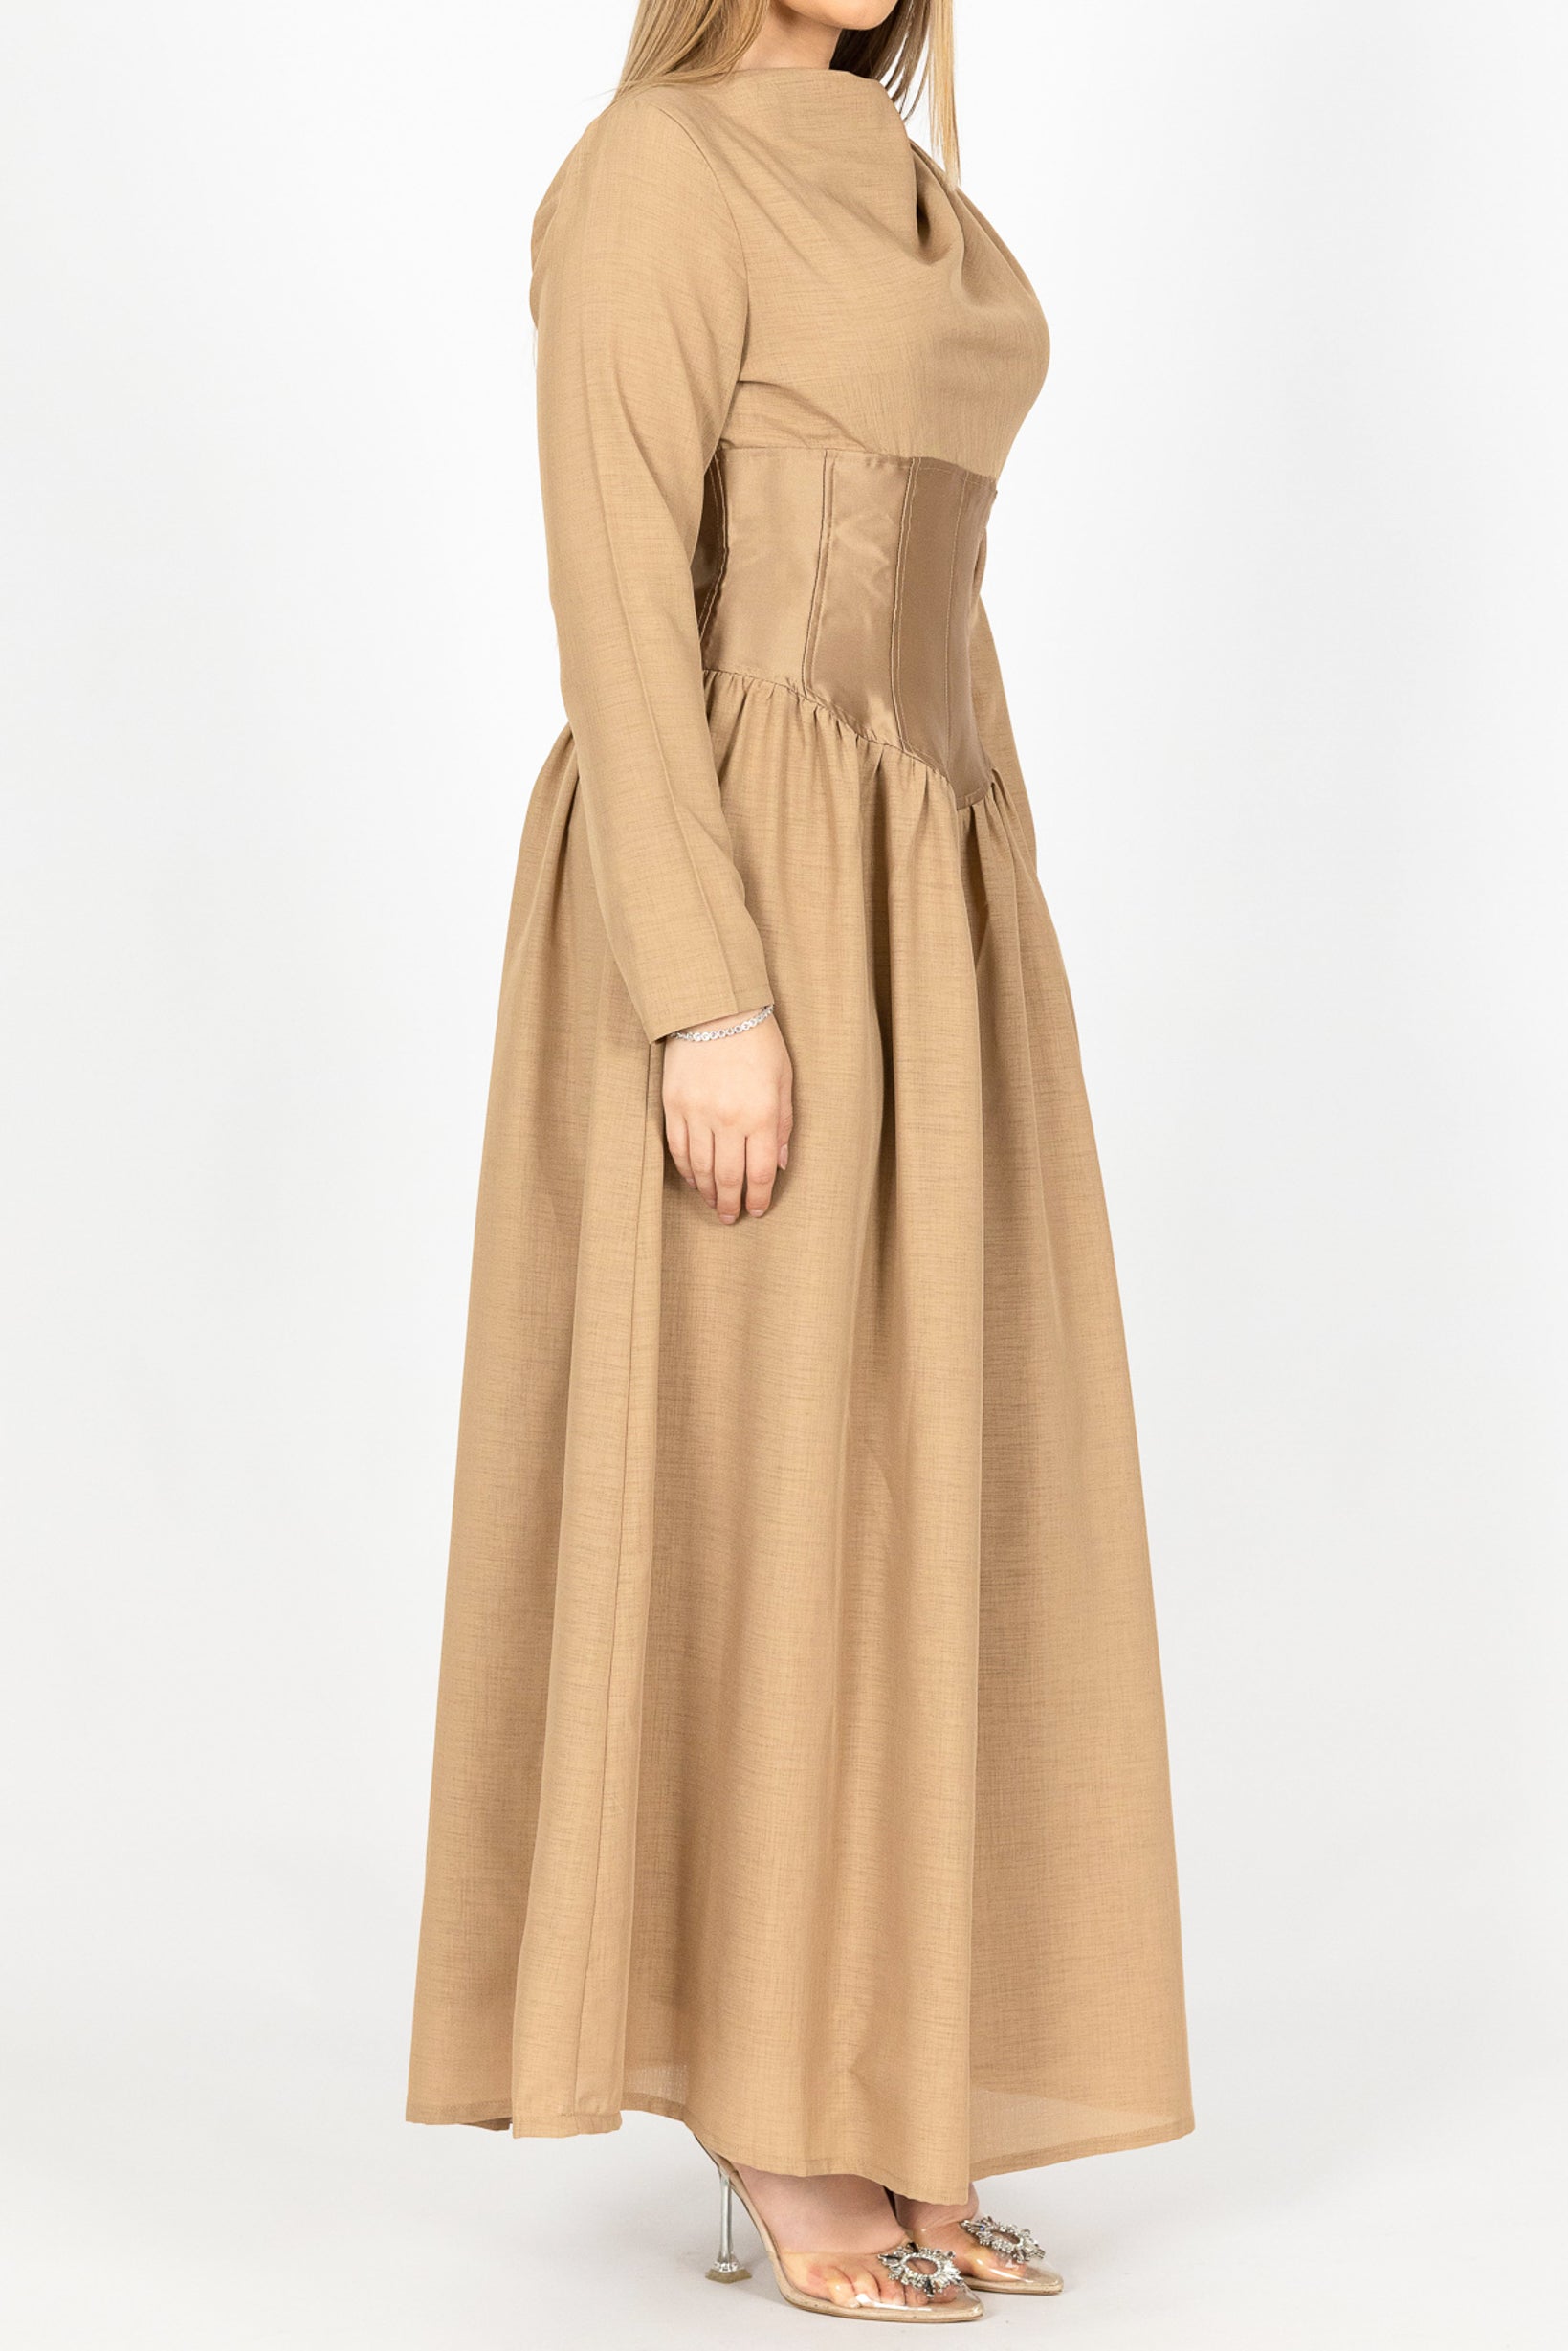 M7909Coffee-dress-abaya